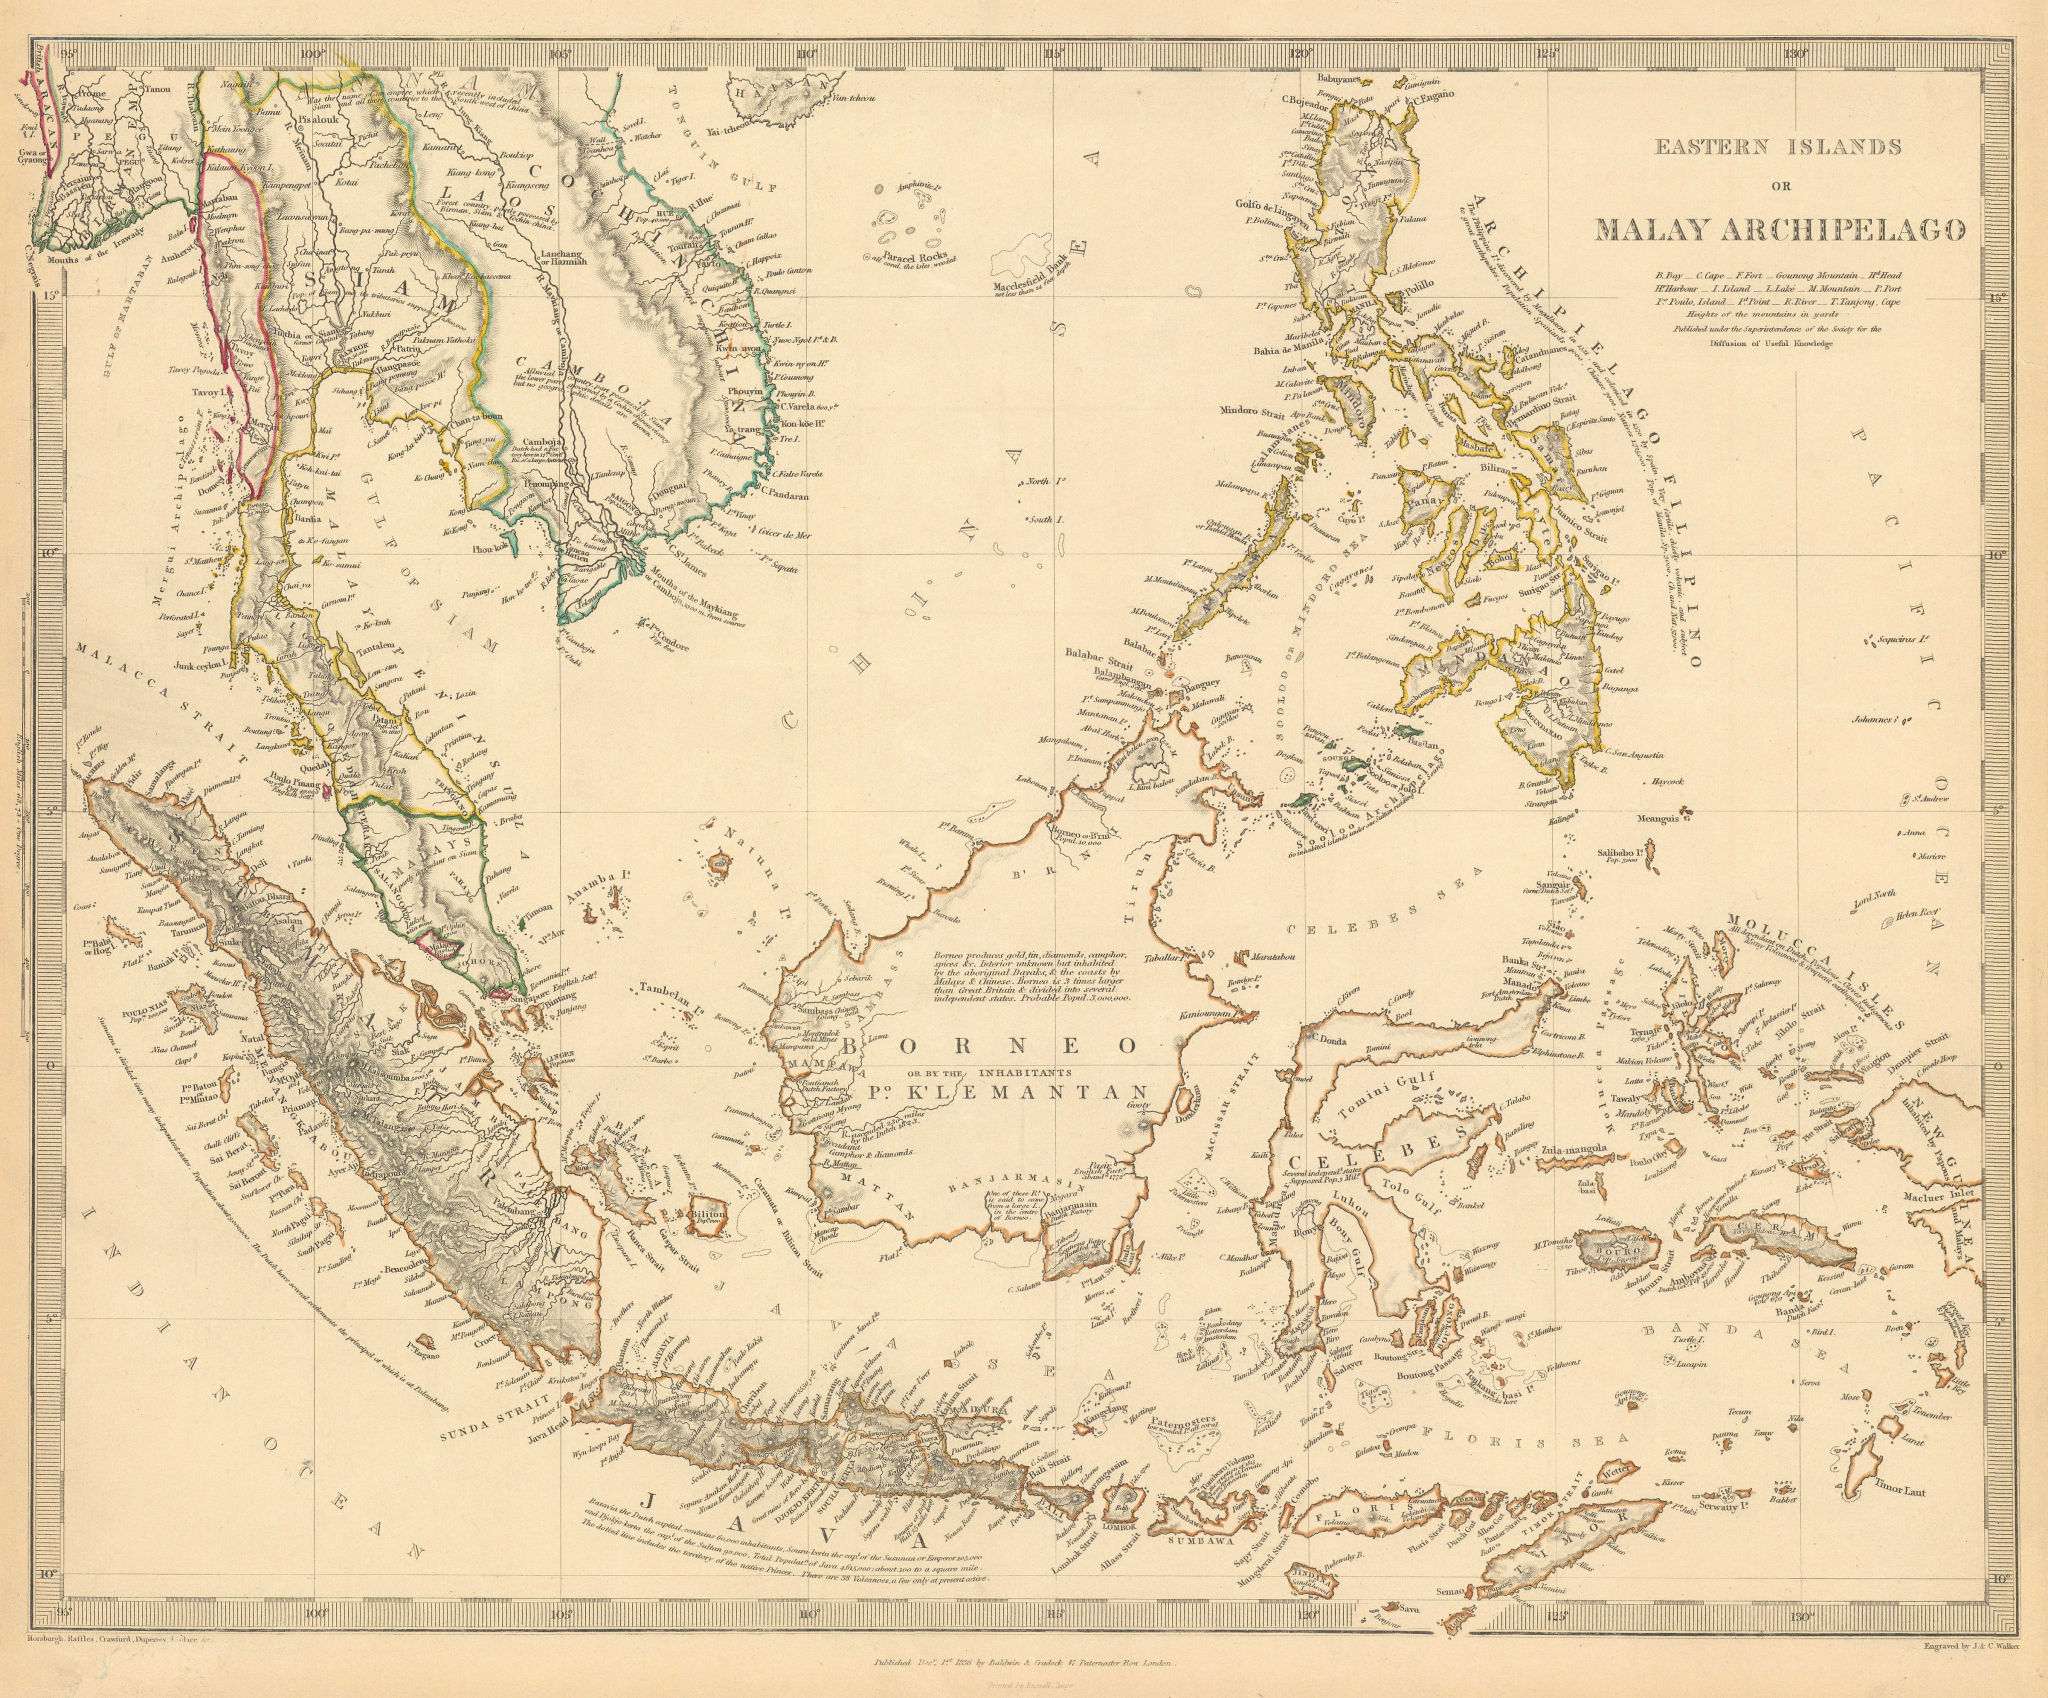 Associate Product MALAY ARCHIPELAGO. Indonesia Malaysia Philippines Indochina. SDUK 1844 old map